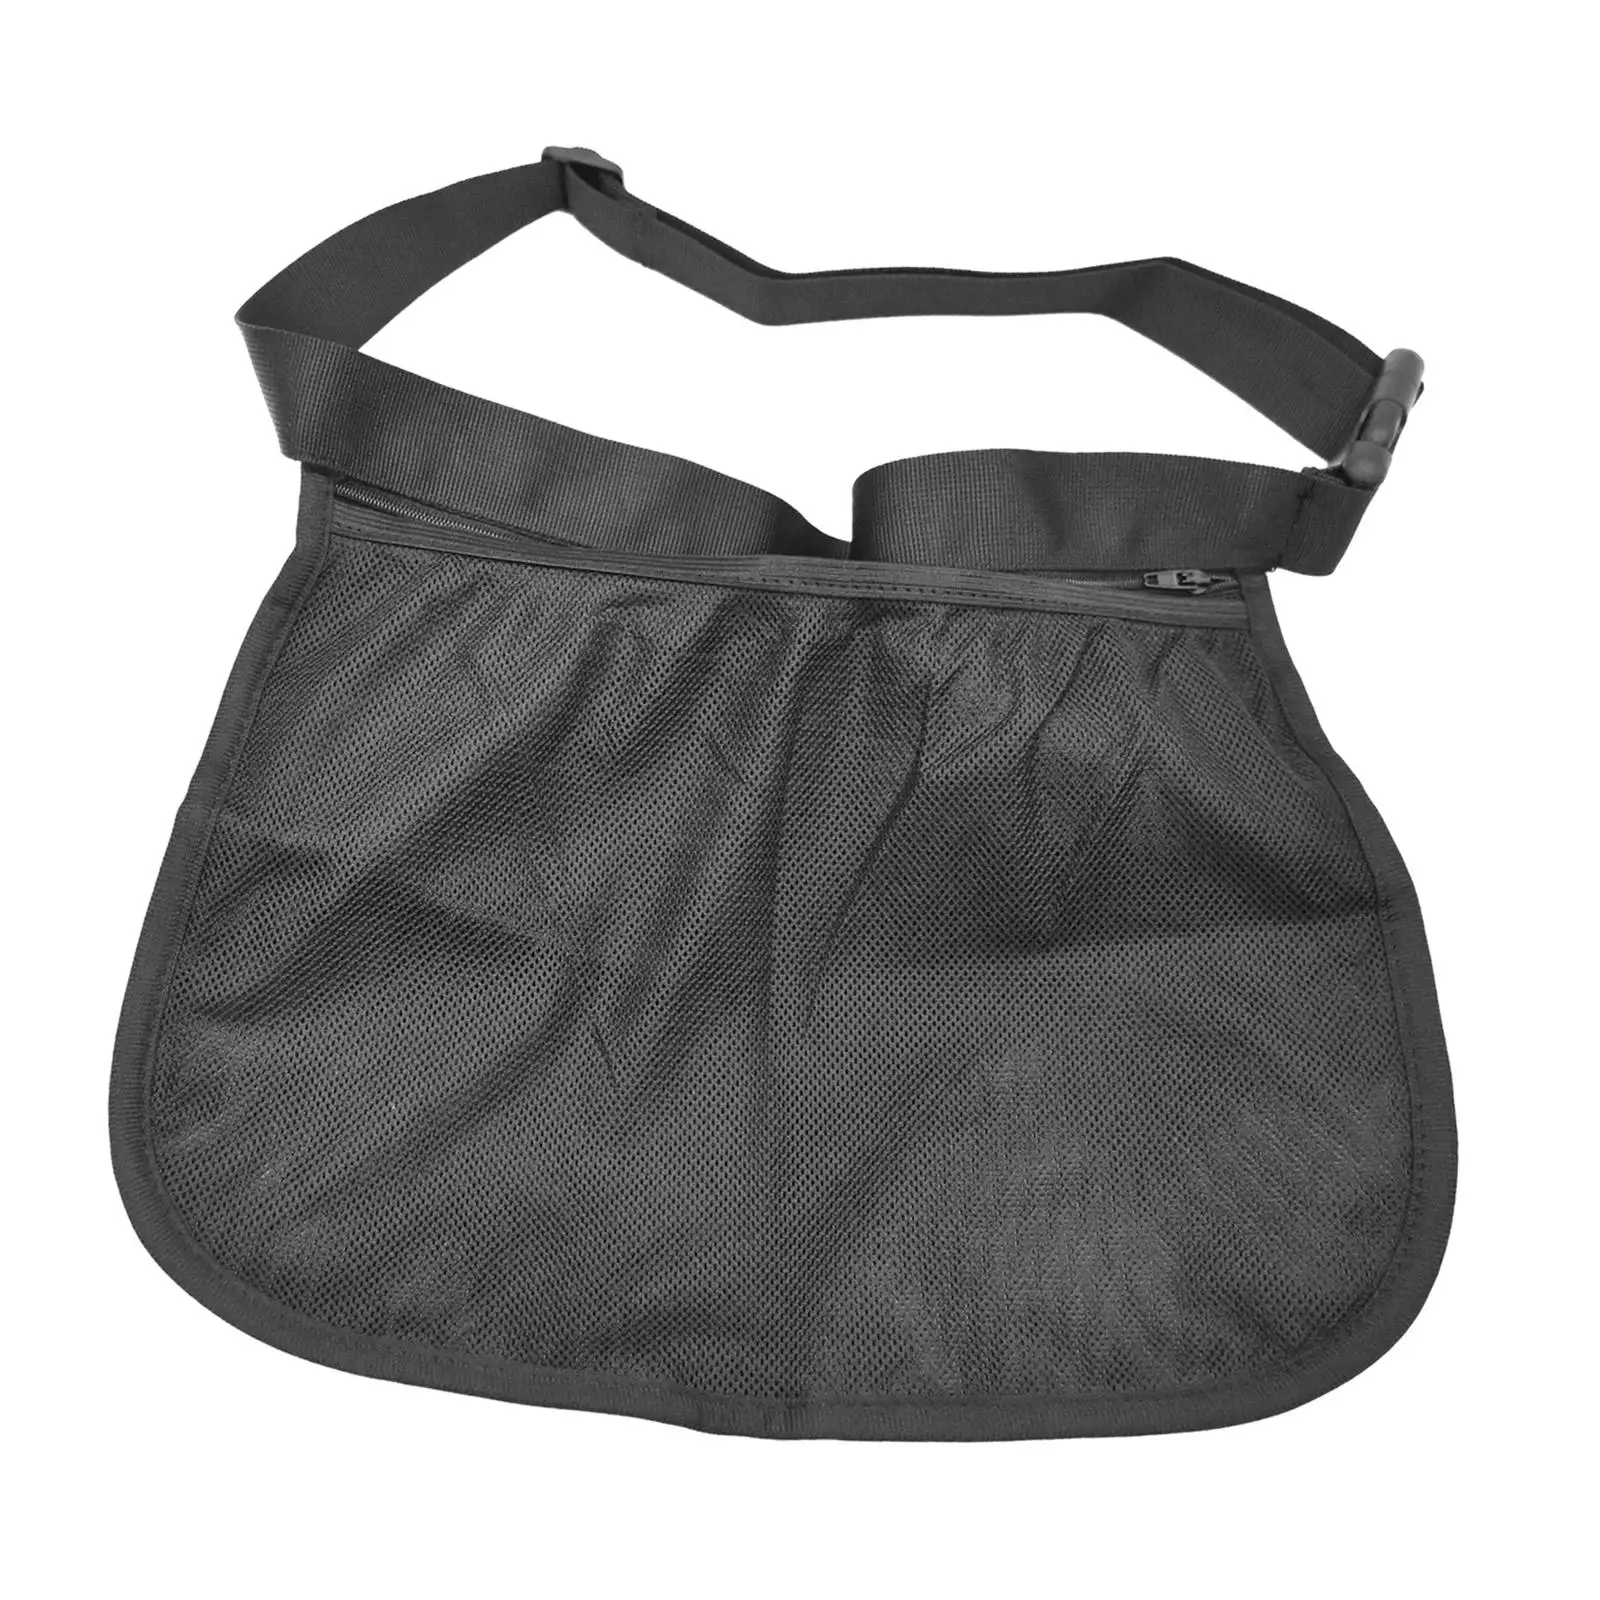 Tennis Ball Holder, Outdoor Ball Storage Bag Waist Hip Bag, Tennis Ball Storage